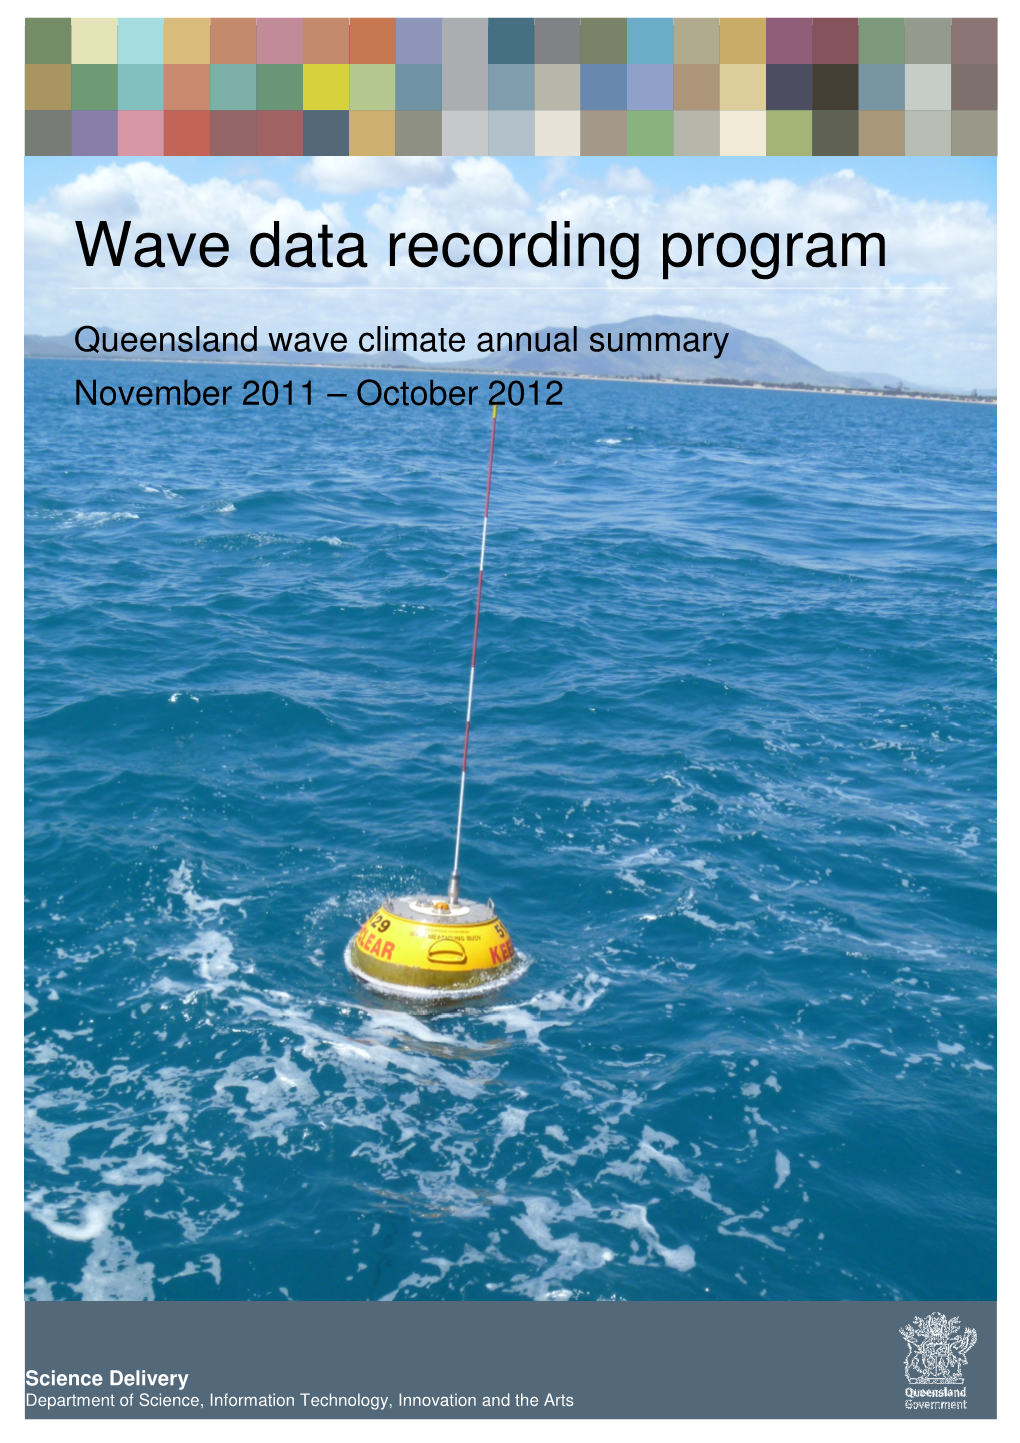 Wave Data Recording Program